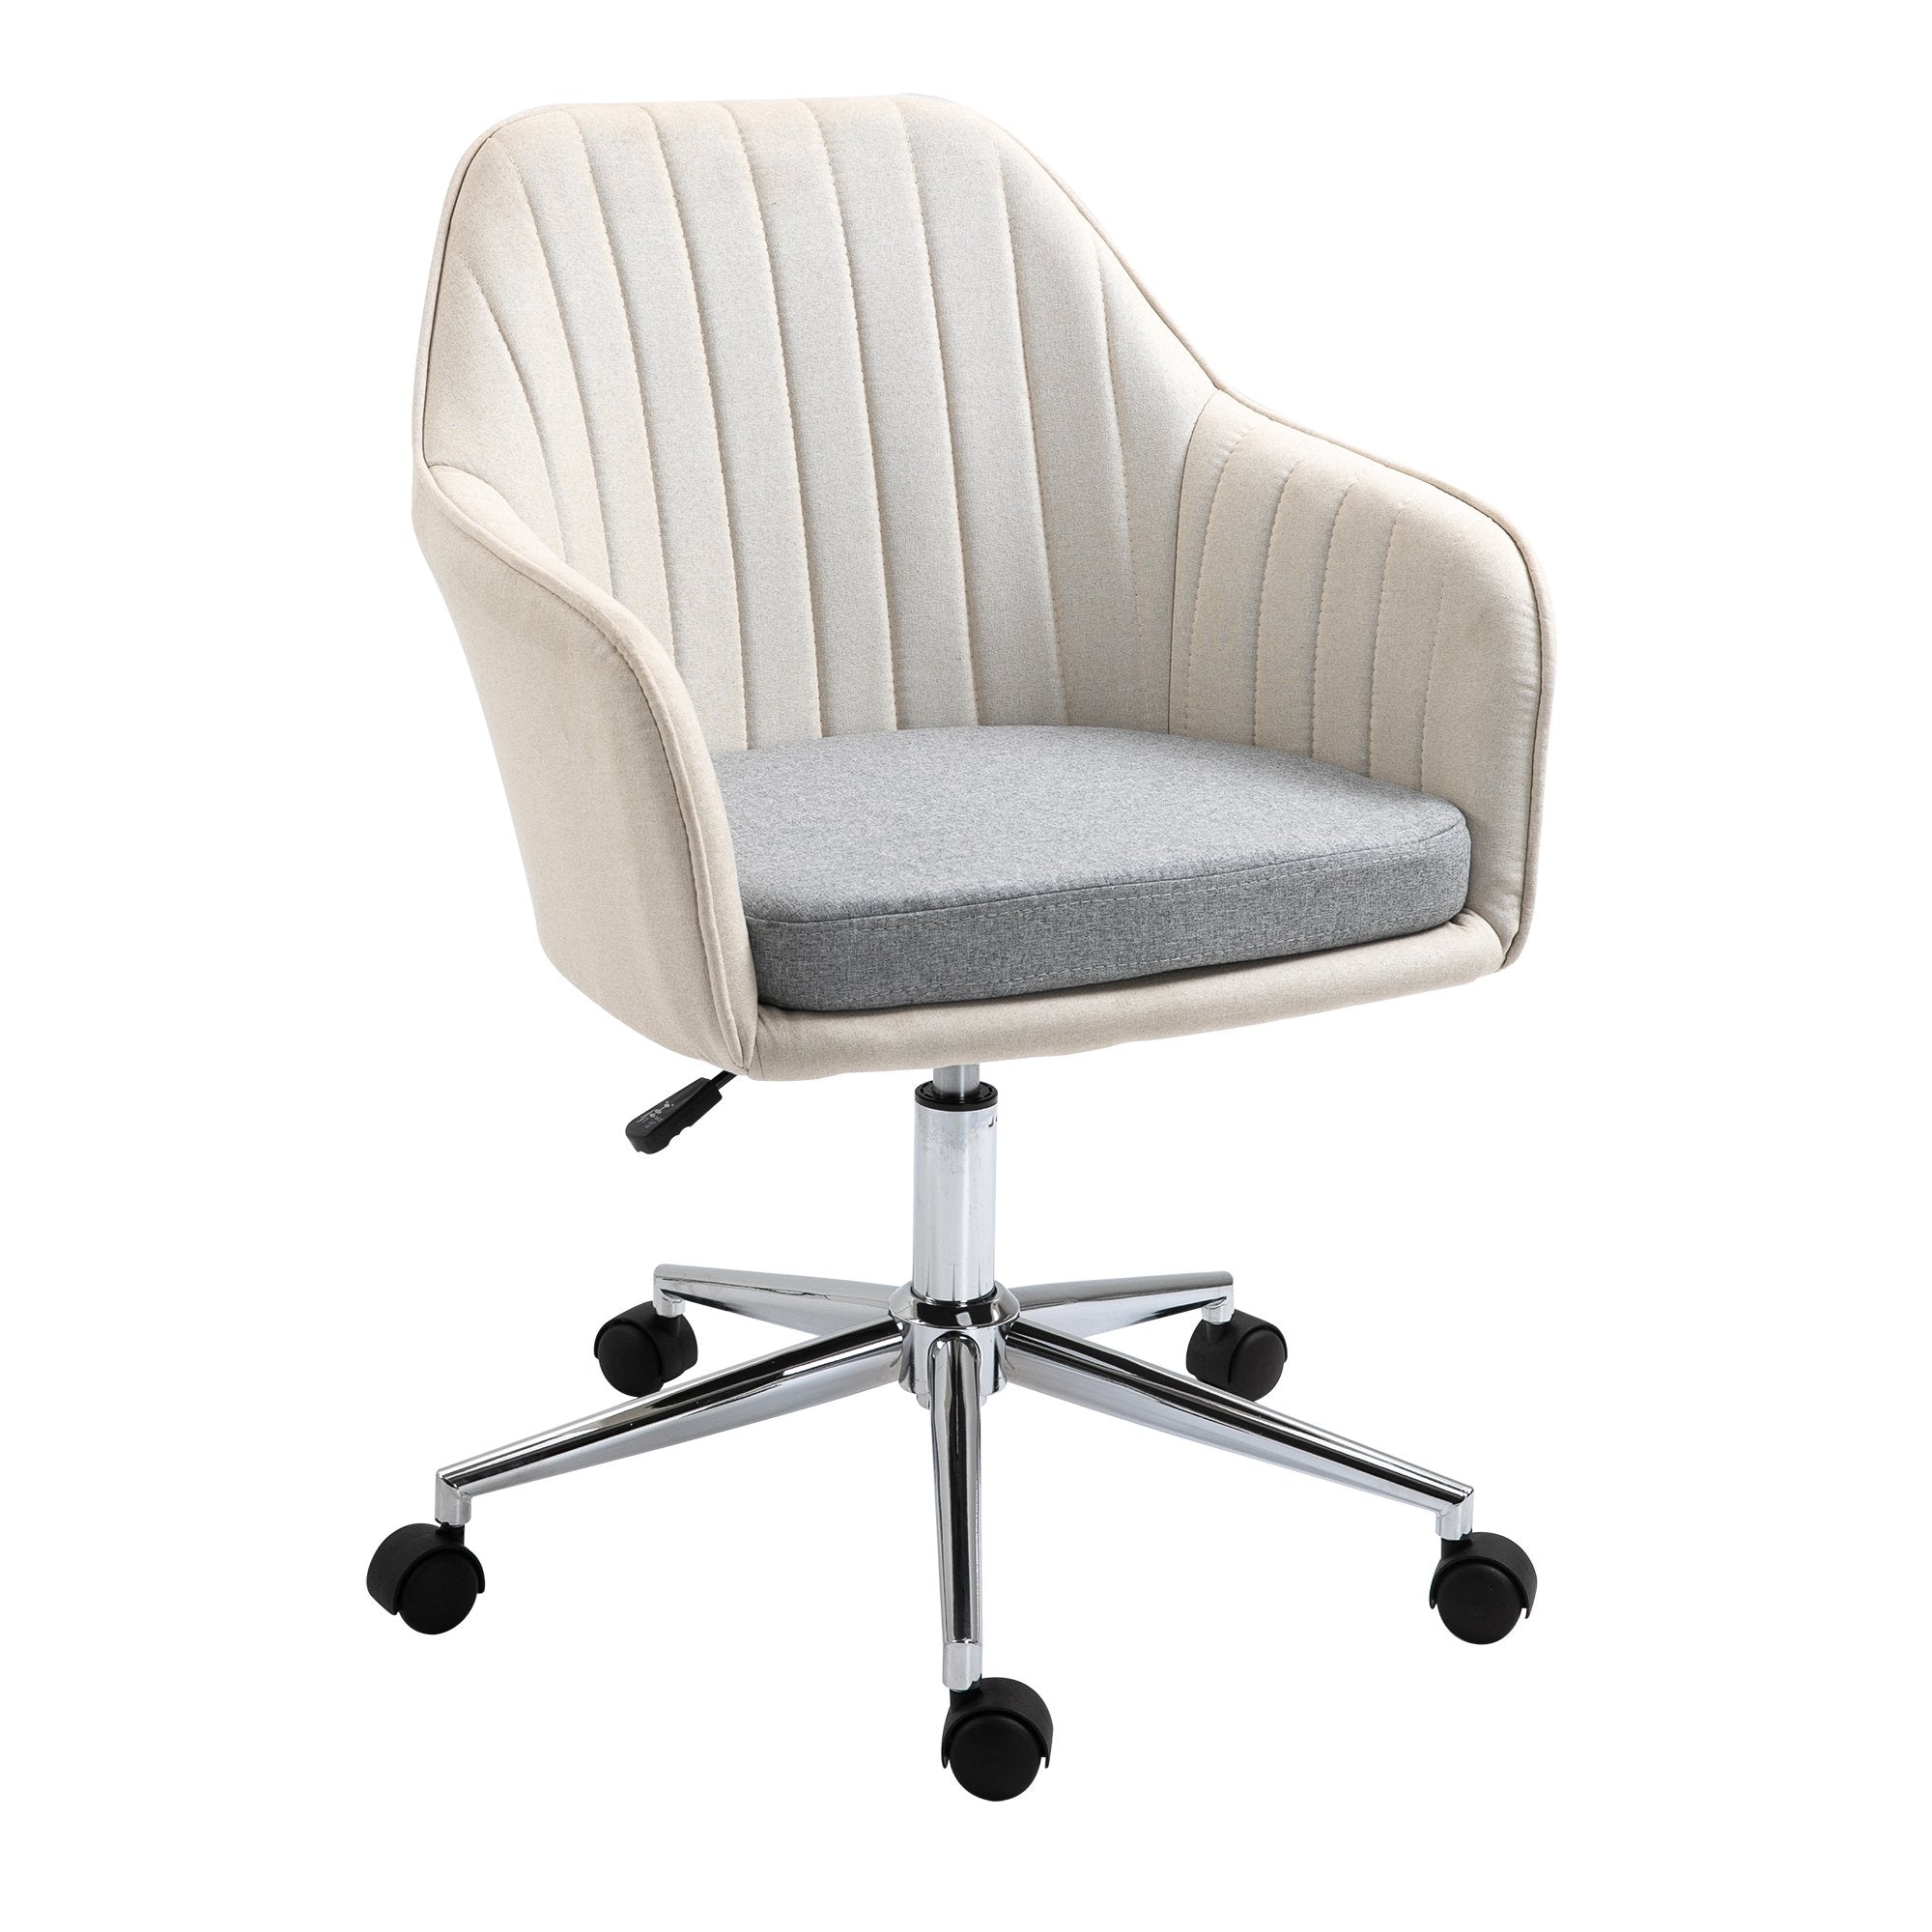 ProperAV Leisure Linen Fabric Swivel Scallop Shape Office Chair with Wheels - Beige